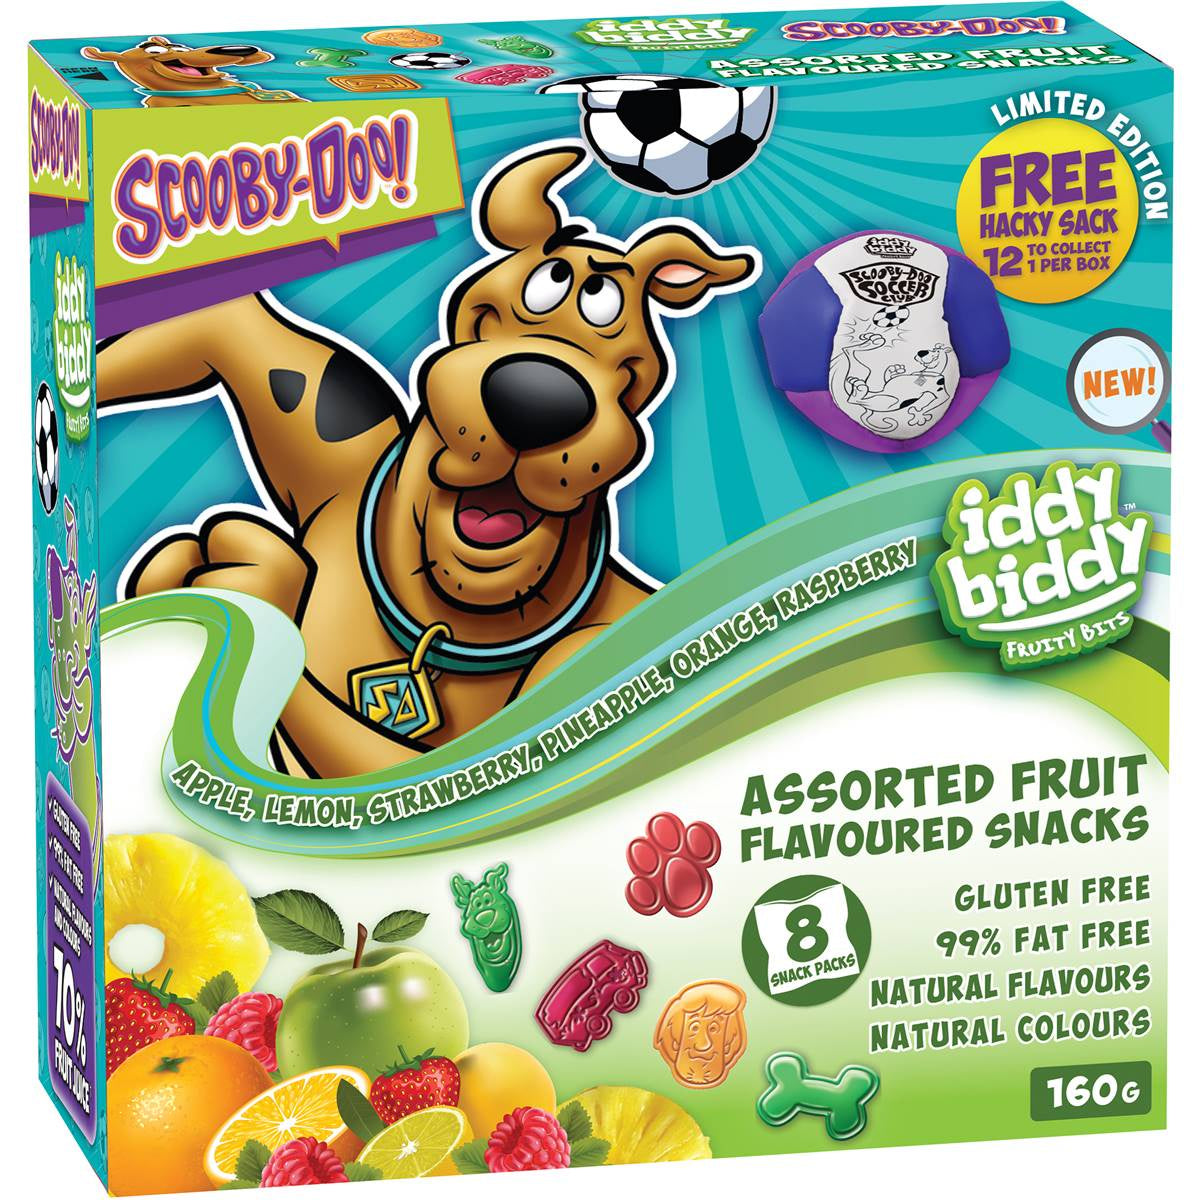 Iddy Biddy Fruit Snacks Scooby Doo 160g 8pk